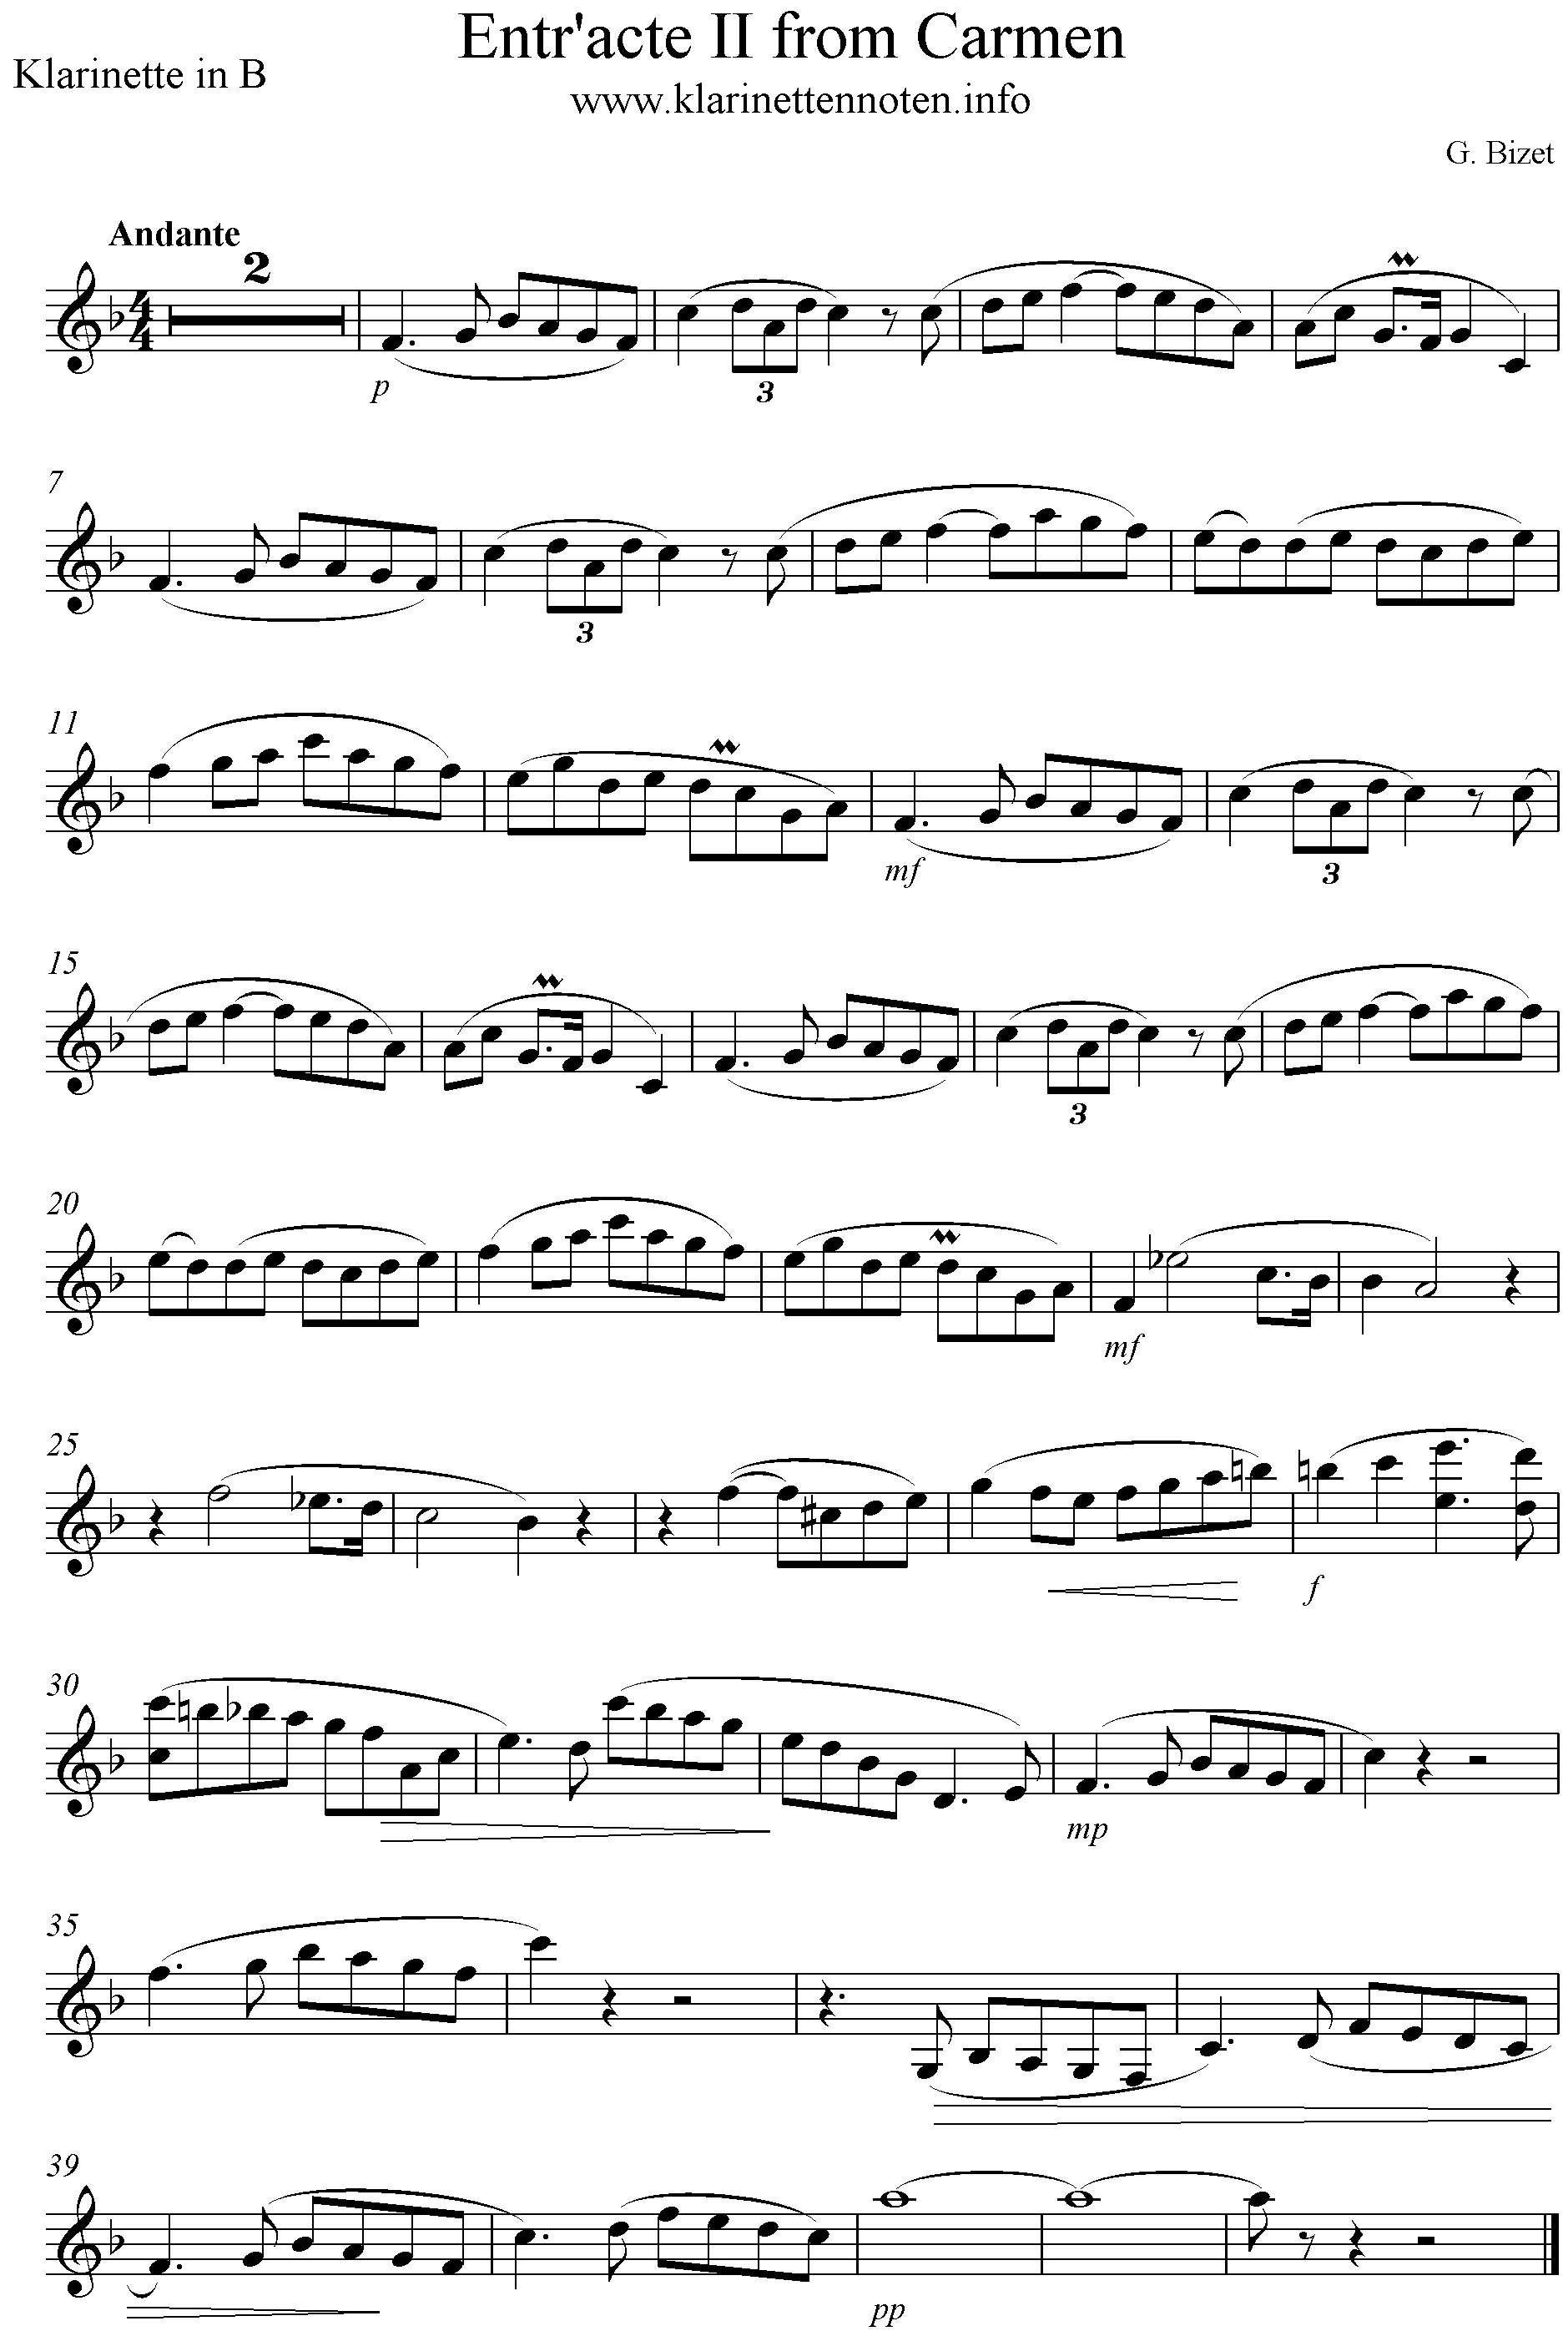 Noten für Klarinette, Entr'acte from Carmen, Clarinet freesheetmusic